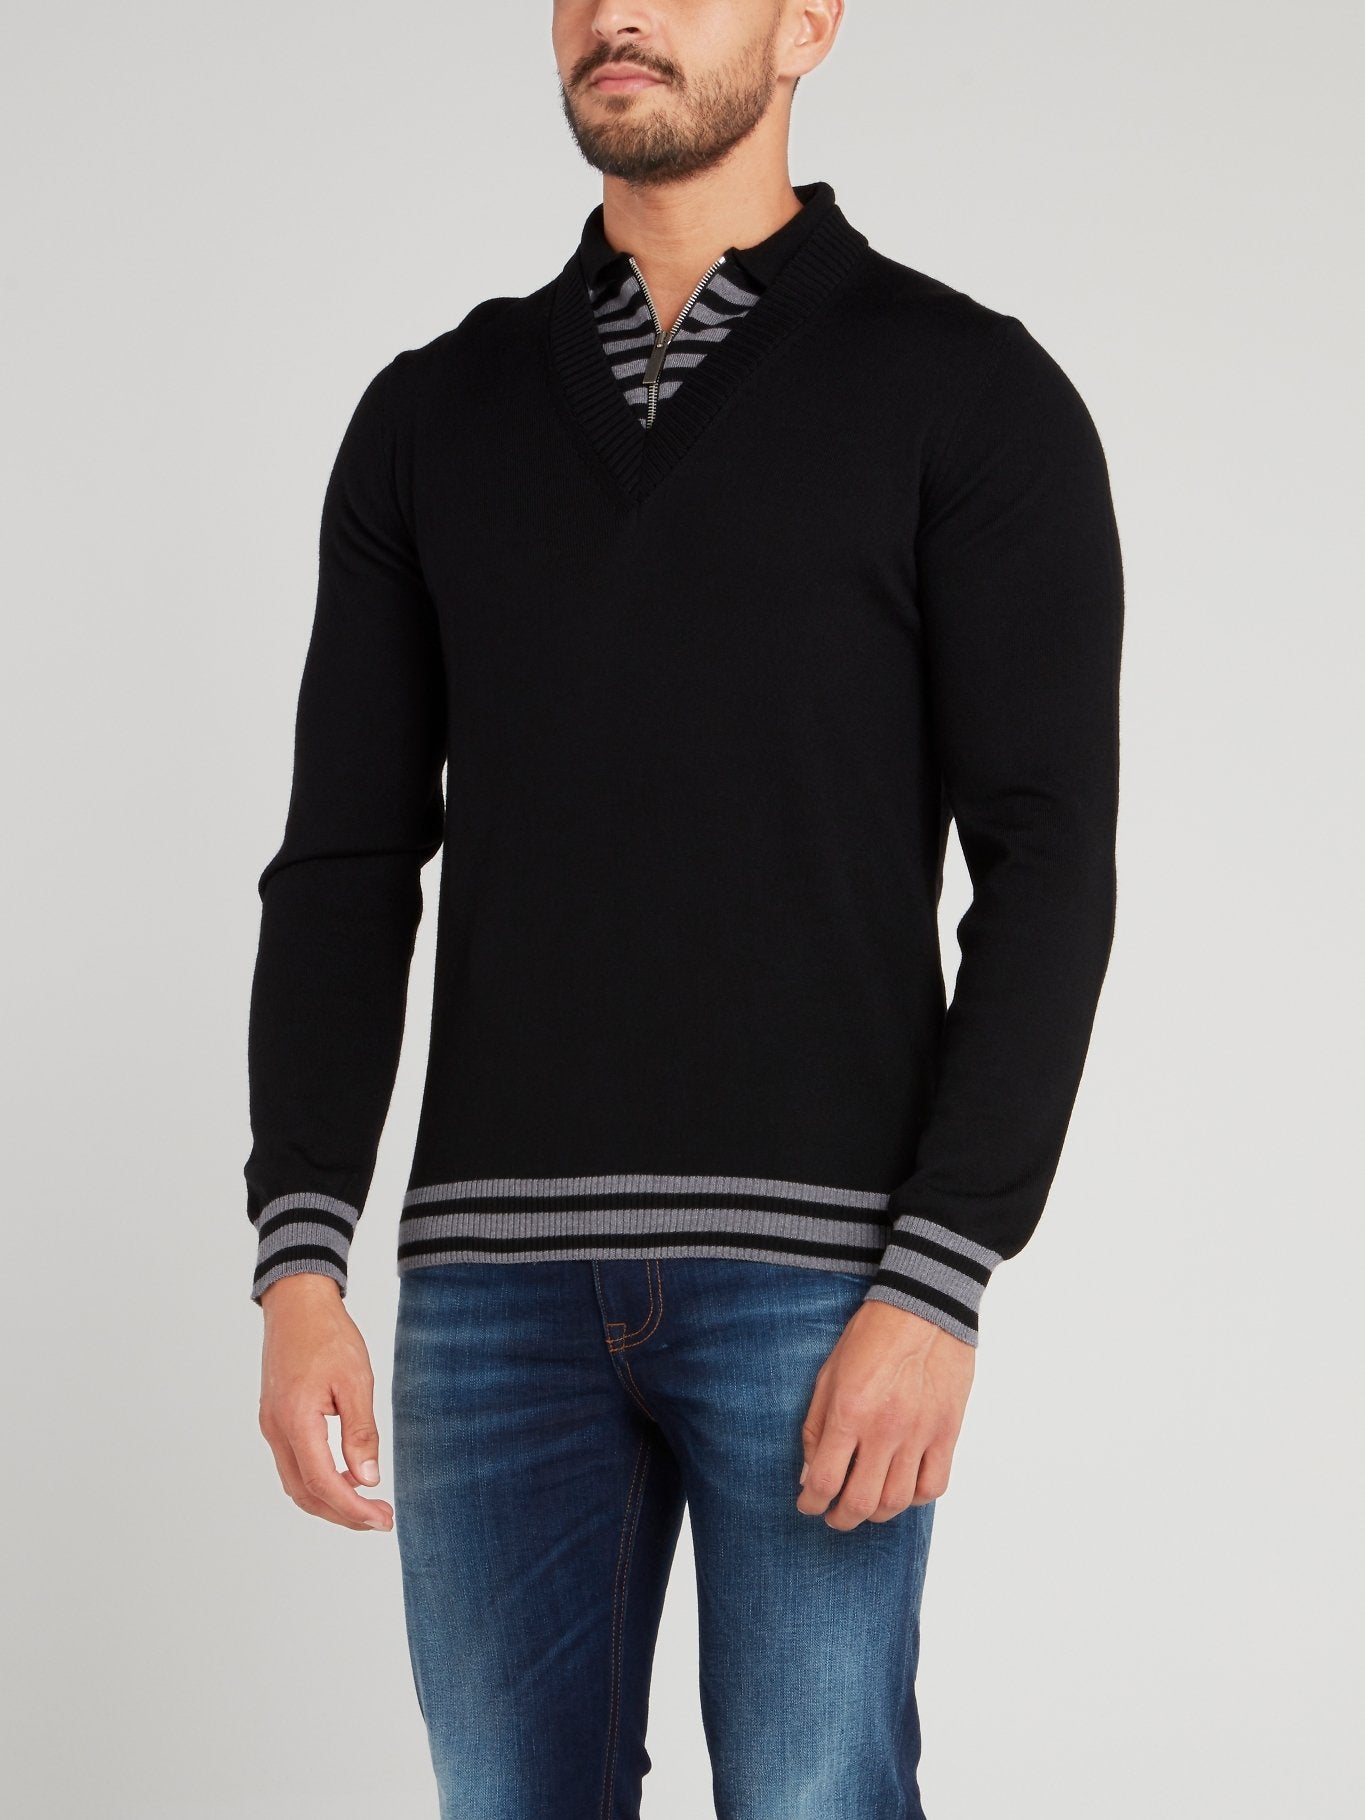 Black Stripe Edge Zip Neck Sweater